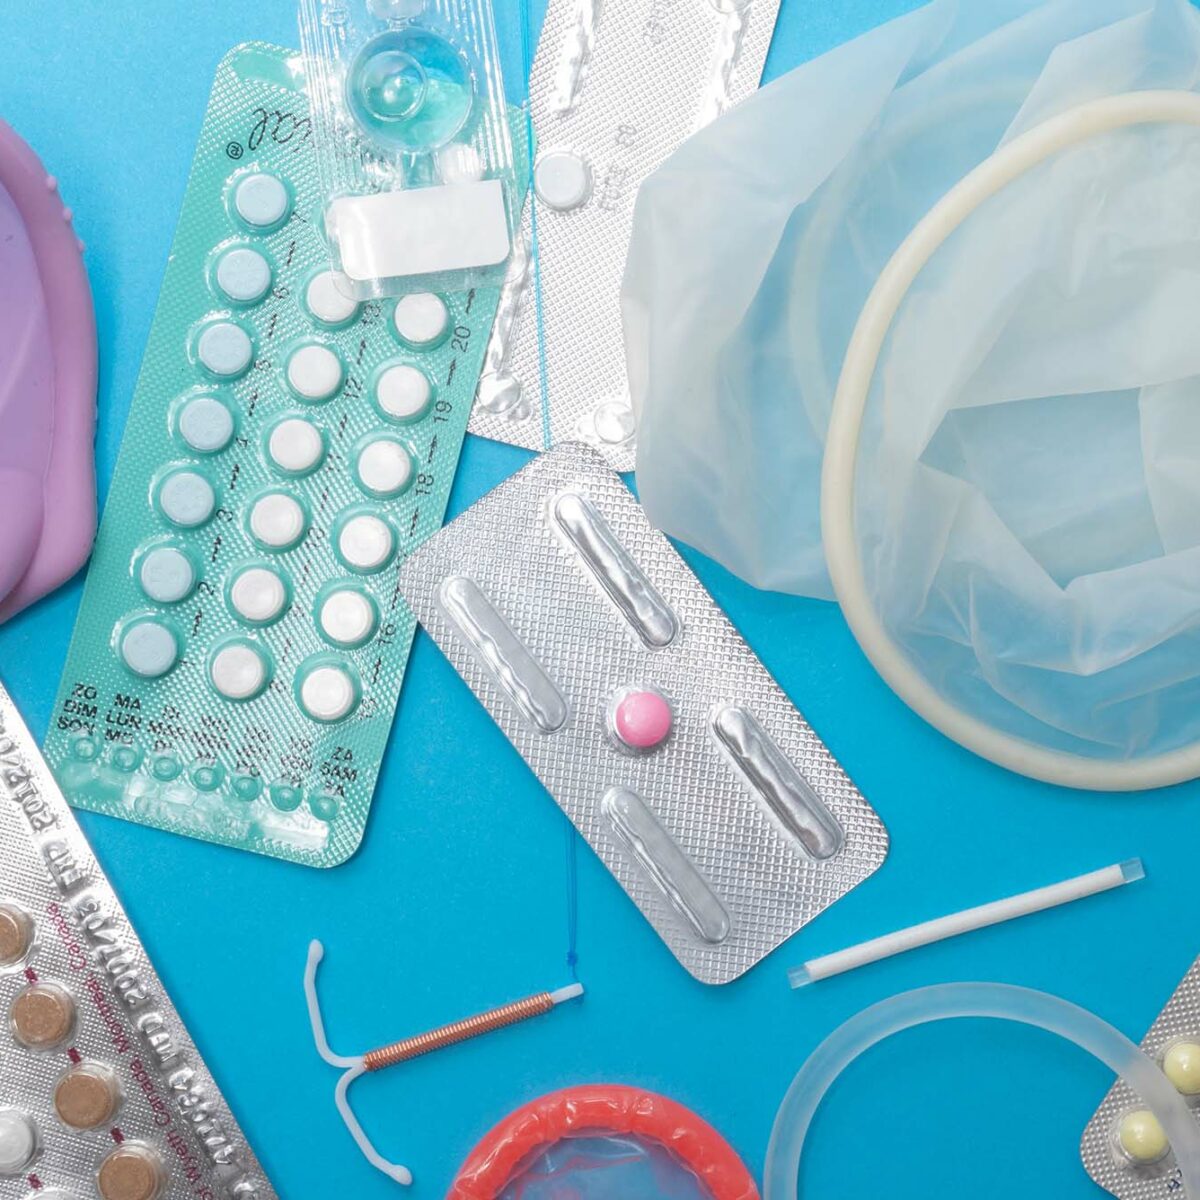 A New Breed of Nonhormonal Birth Control | The Brink | Boston University